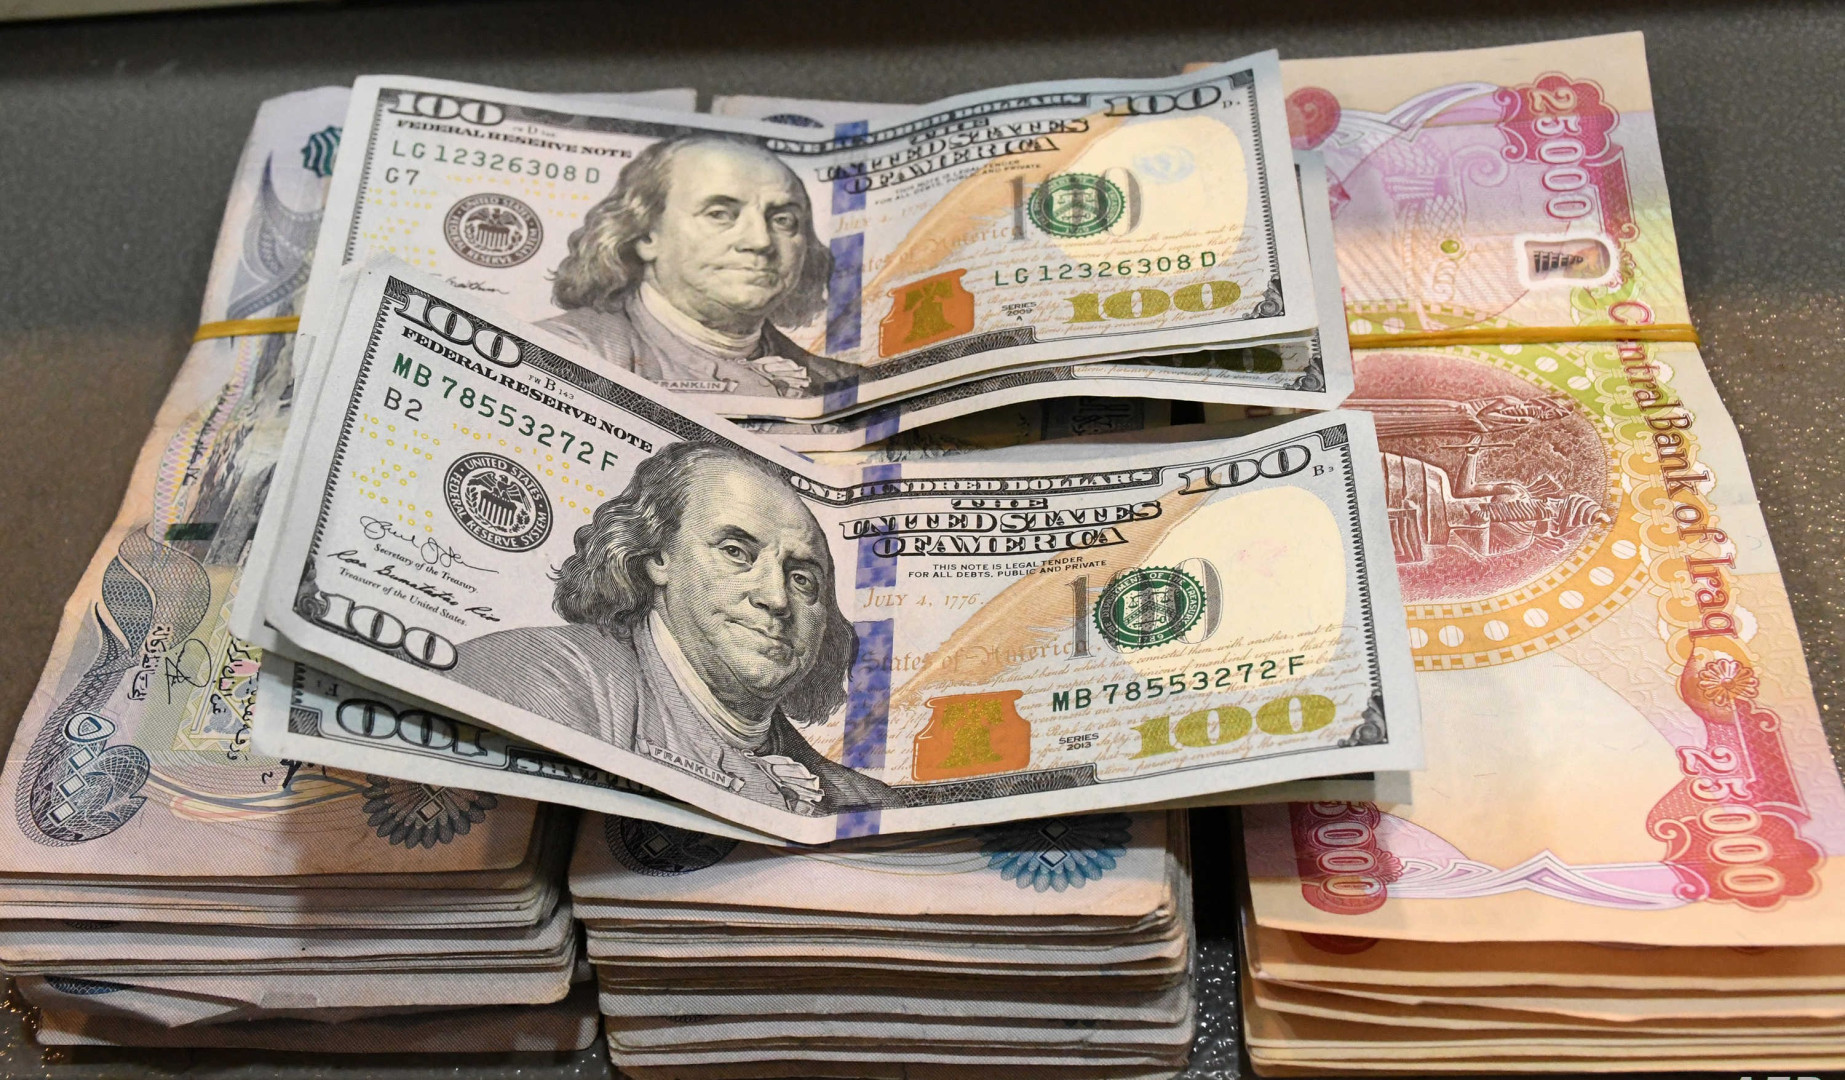 Iraqi Dinar: navigating currency volatility and black market activity